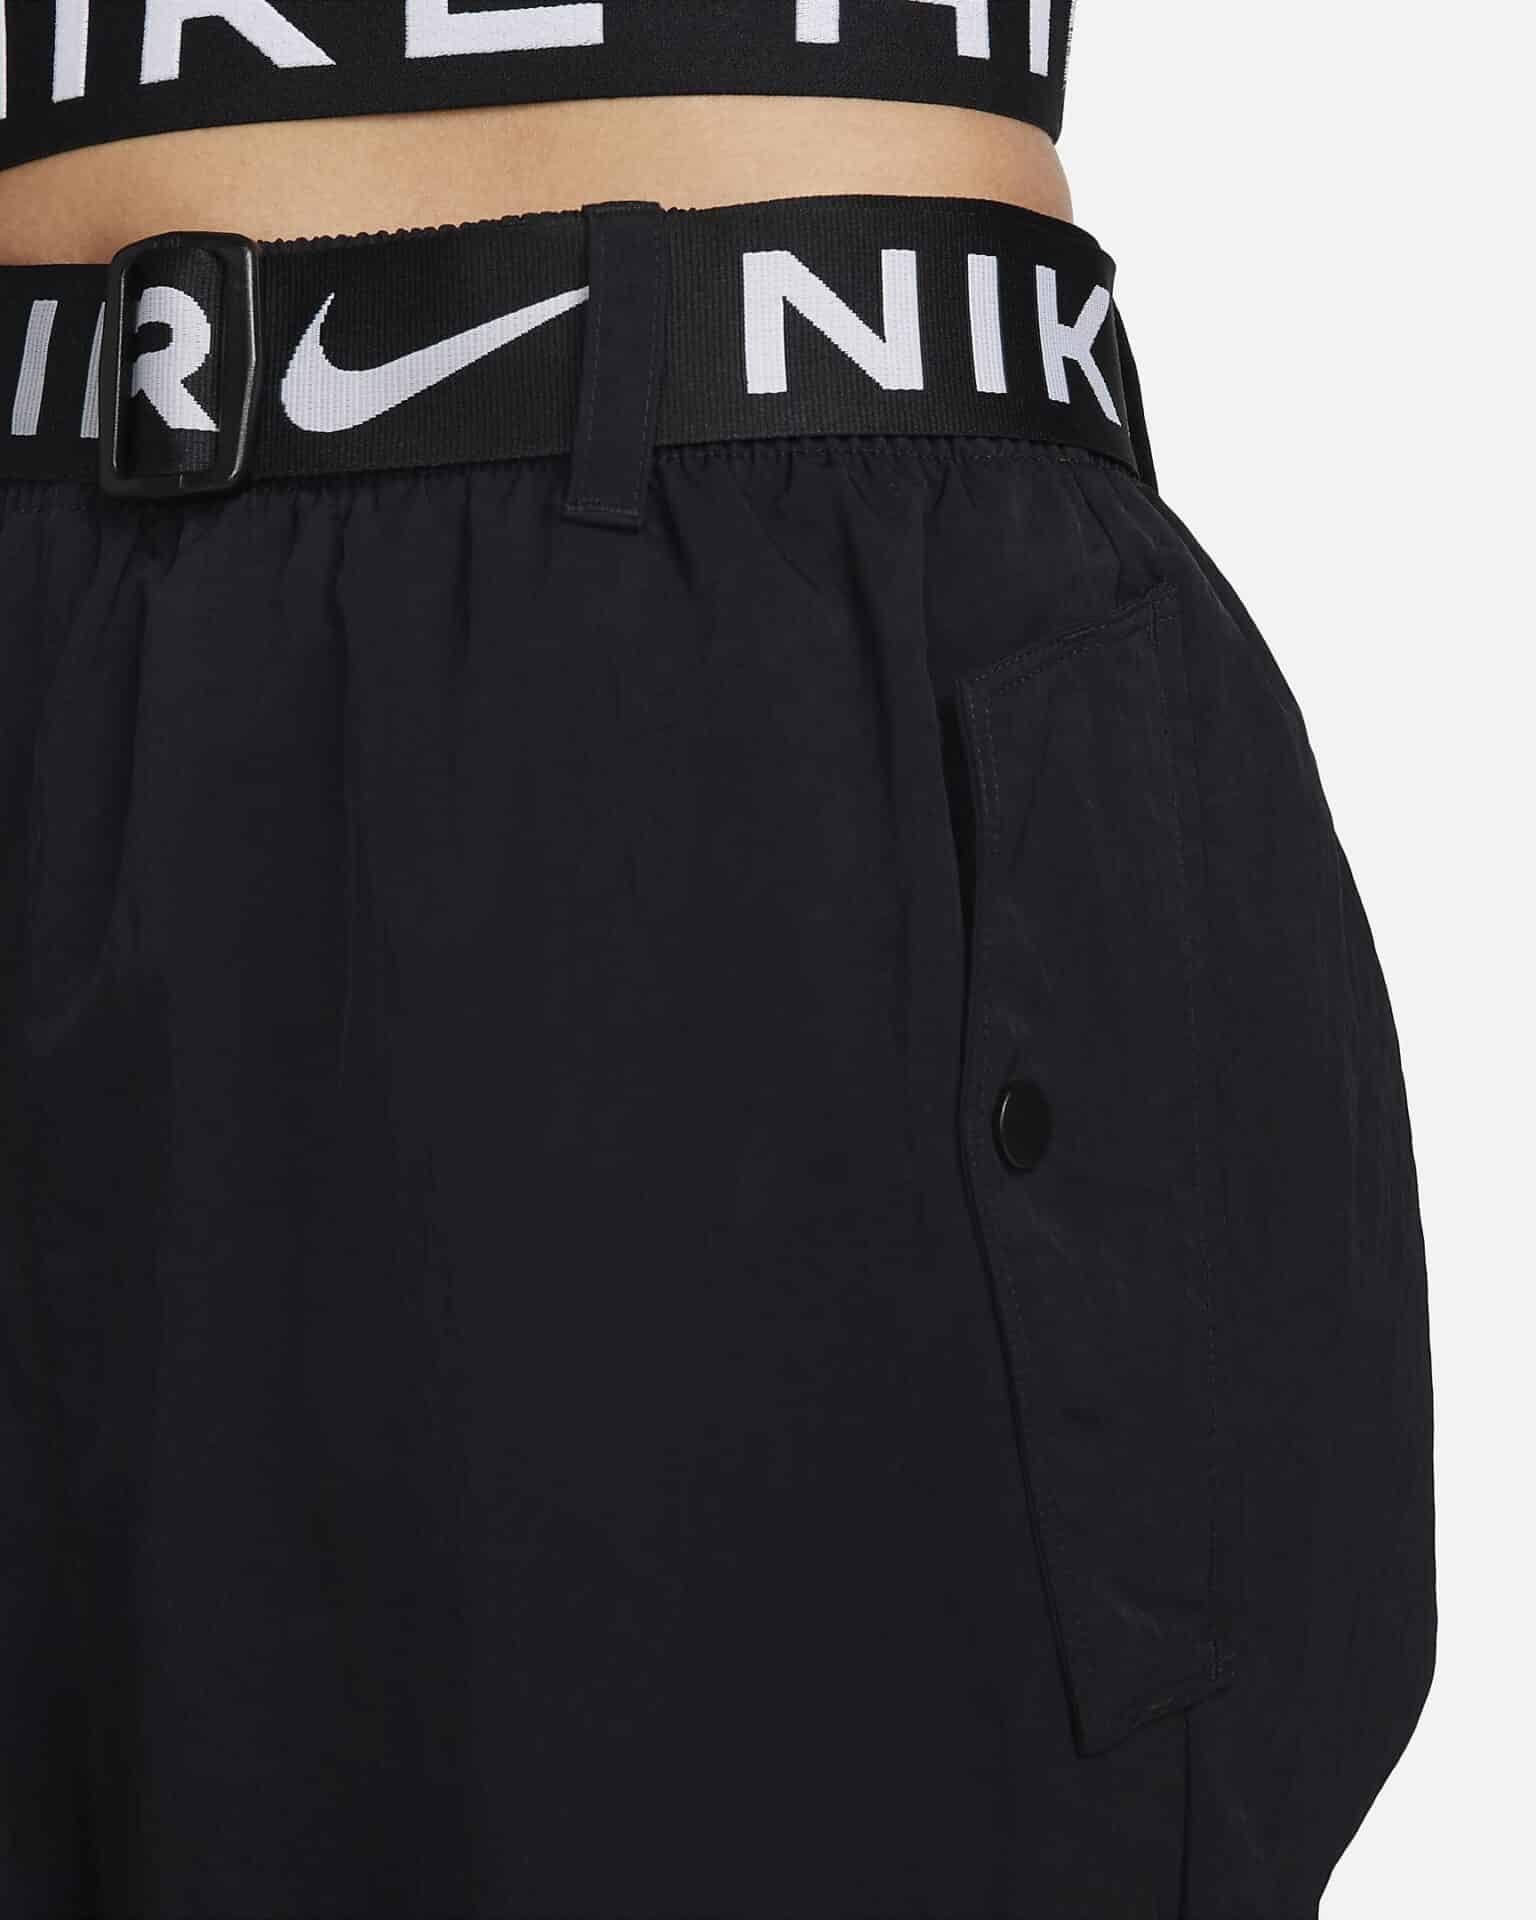 Nike Sportswear Air Women's High-Waisted Woven Trousers